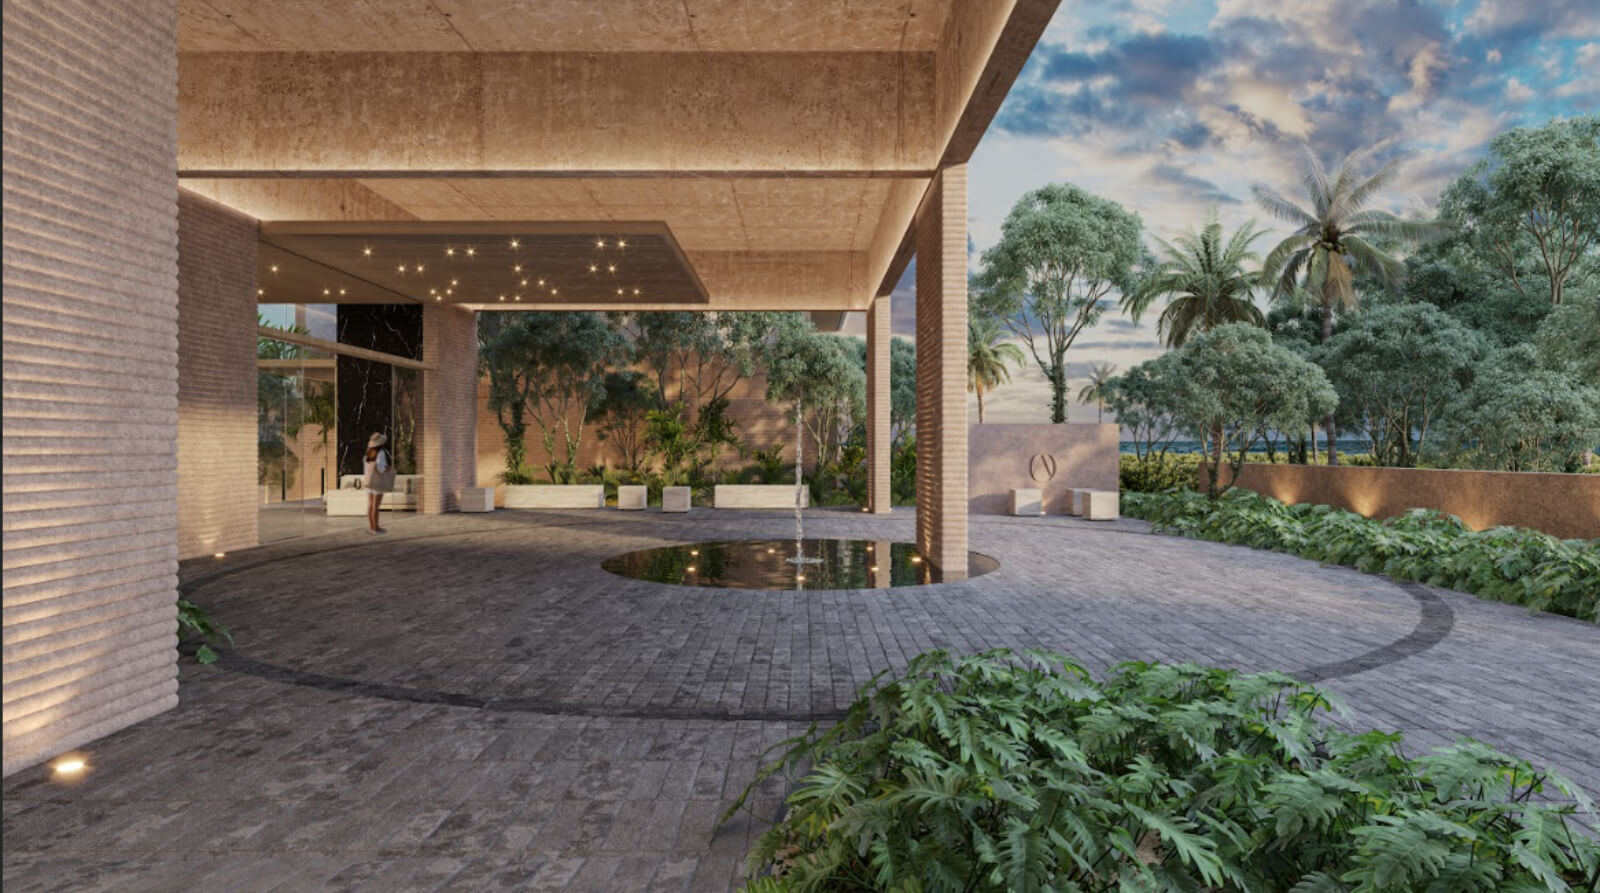 Condo with 29m2 garden, 2 terraces, ocean view pool, 200 meters from the beach, pre-construction, sale Puerto Morelos.